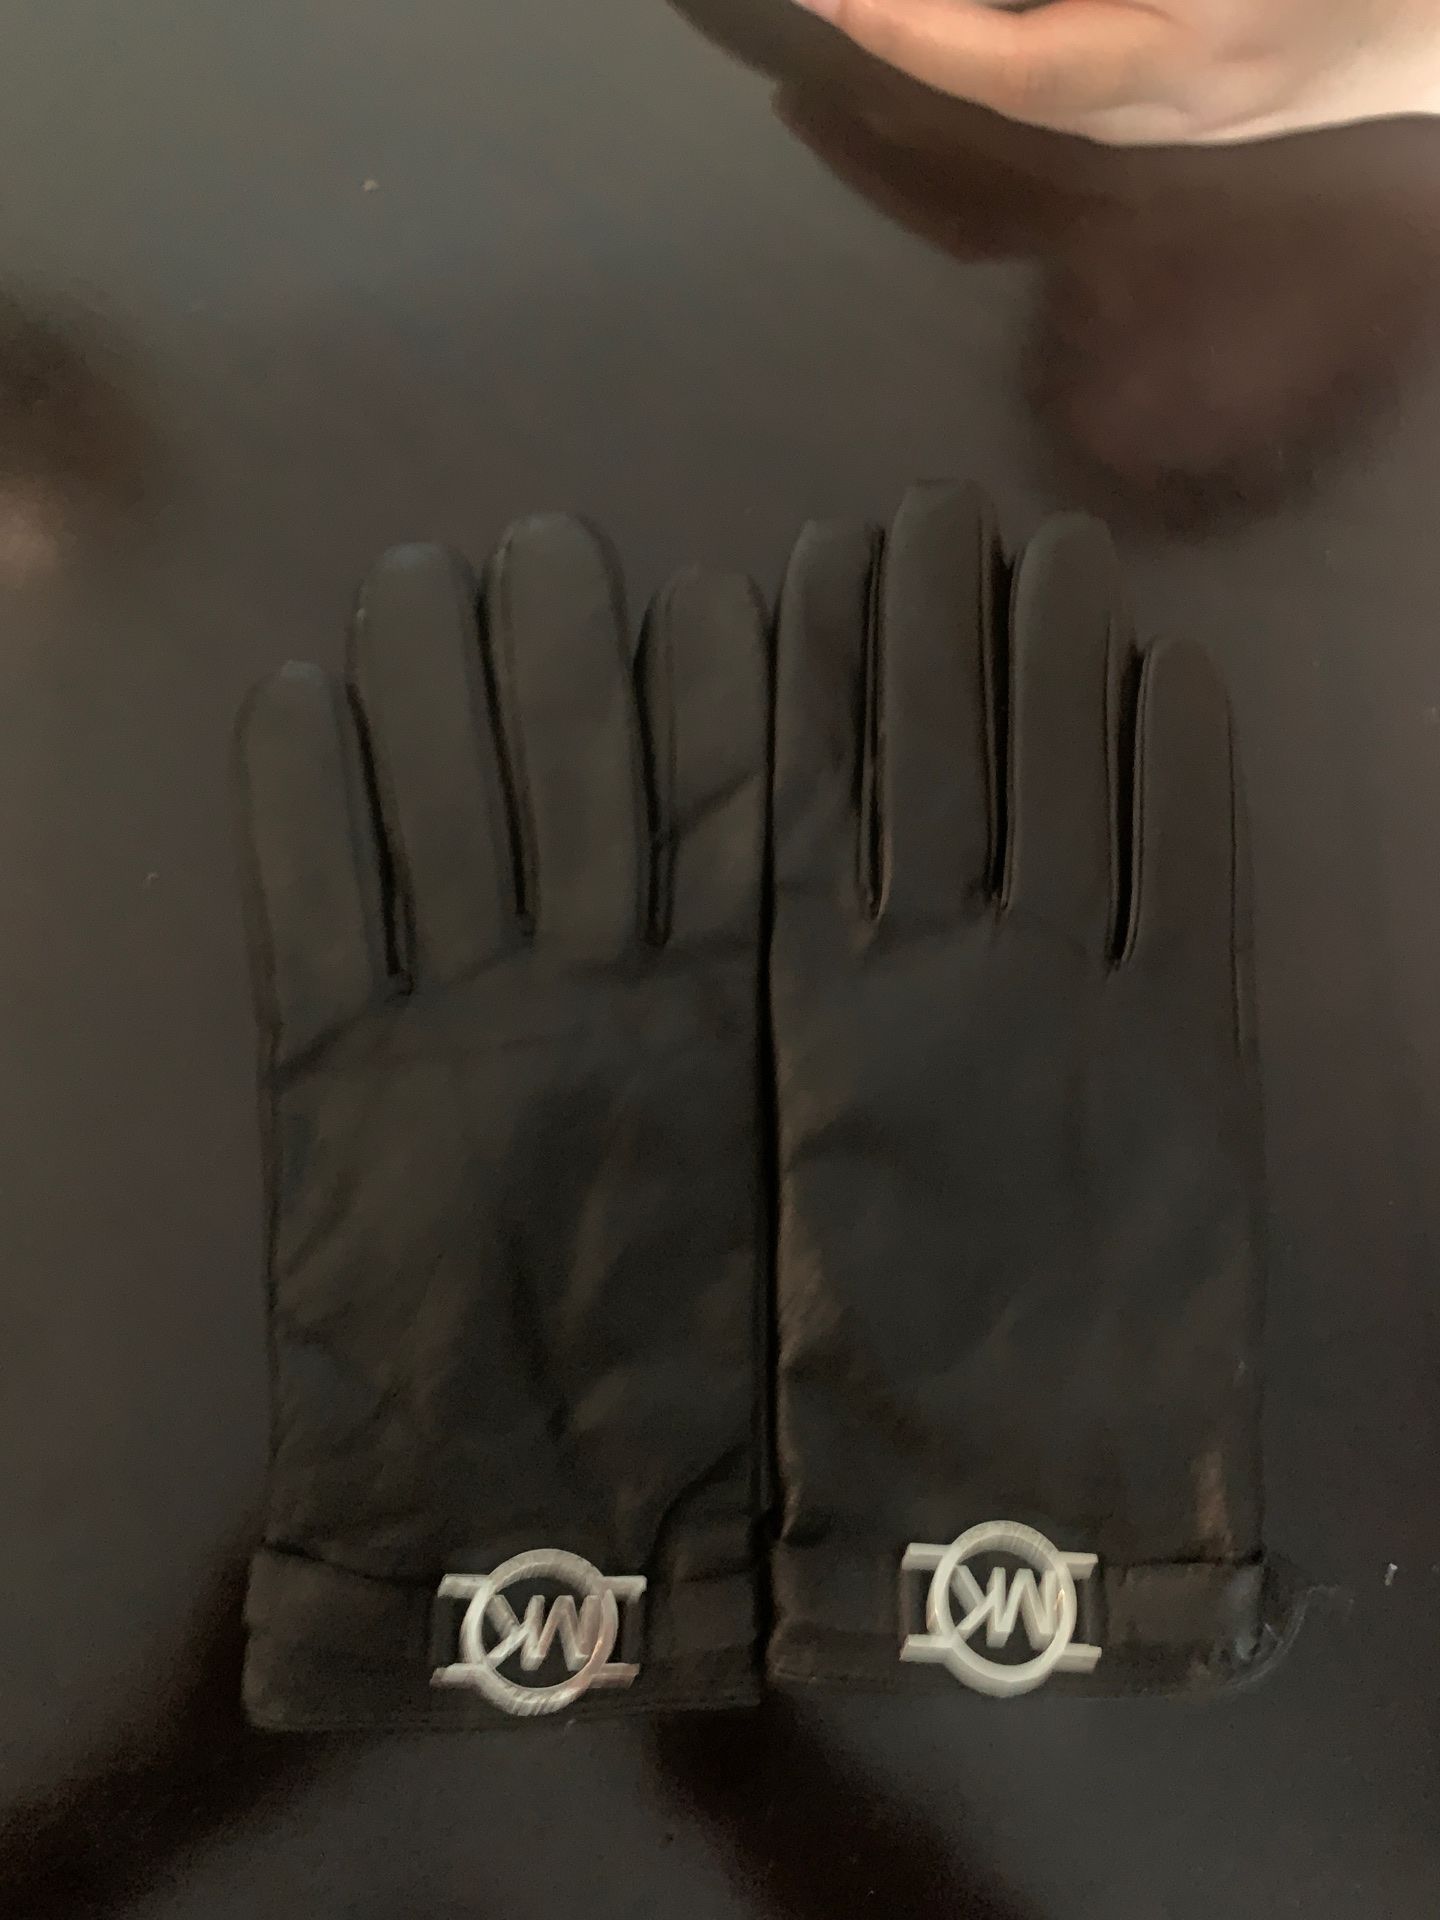 Michael Kors leather gloves size medium